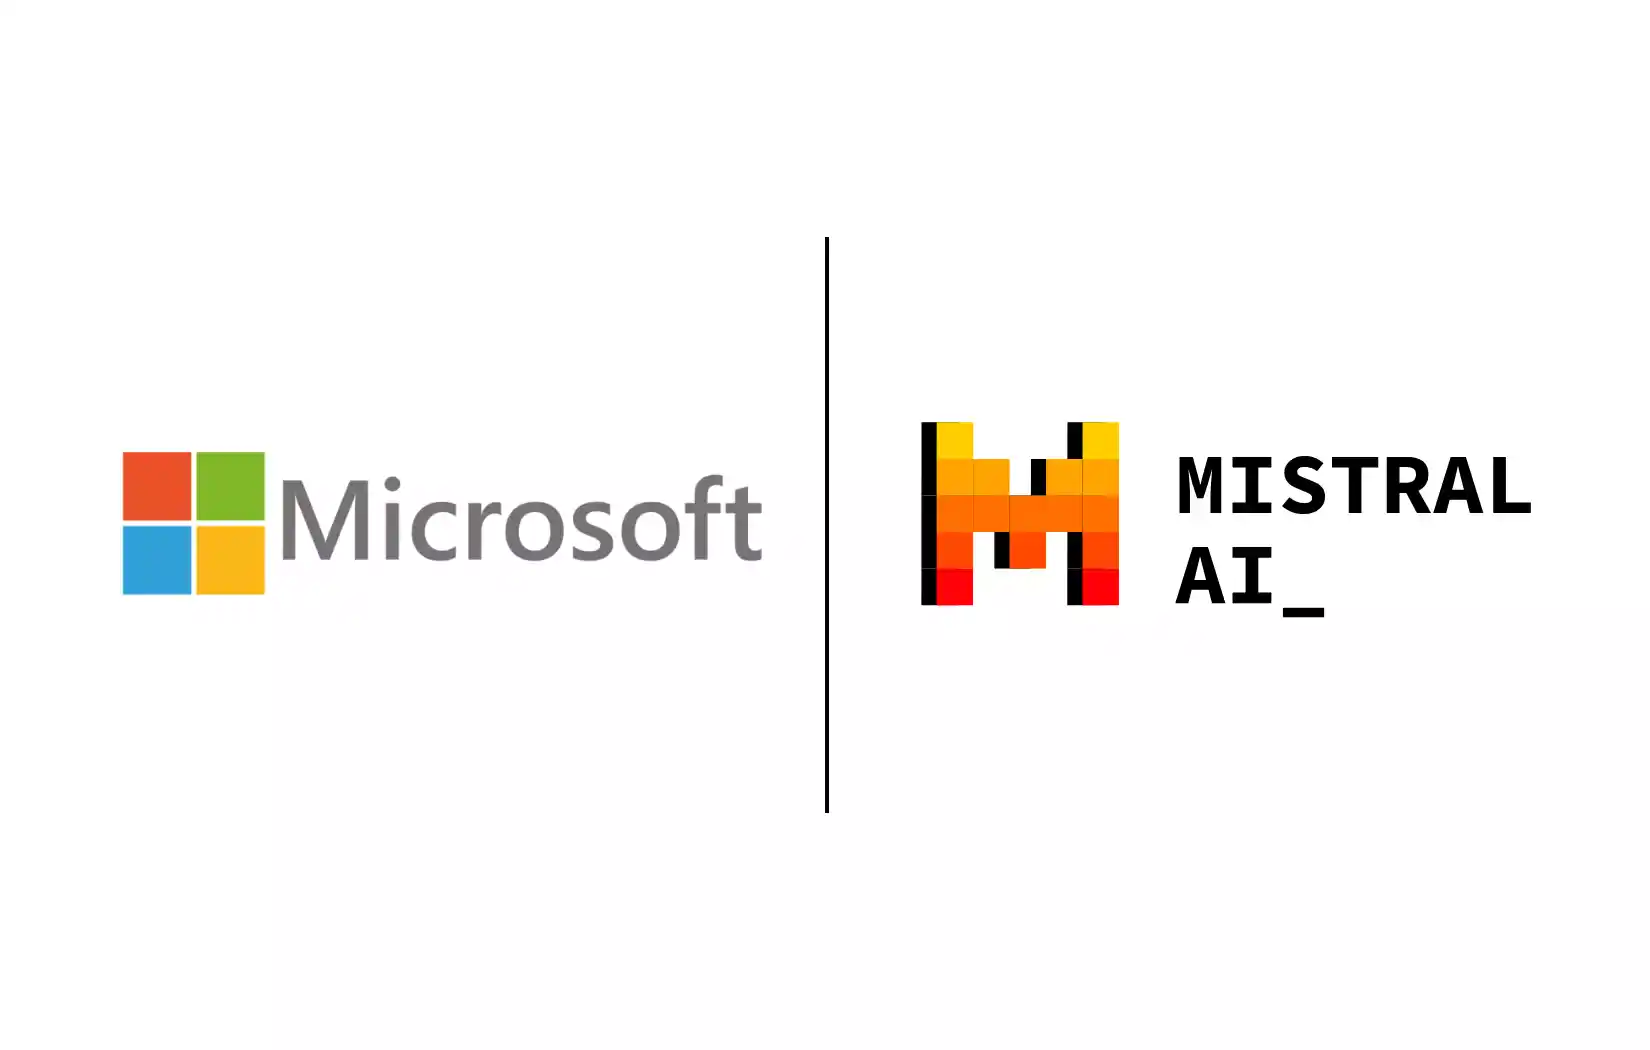 Mistral AI and Microsoft 